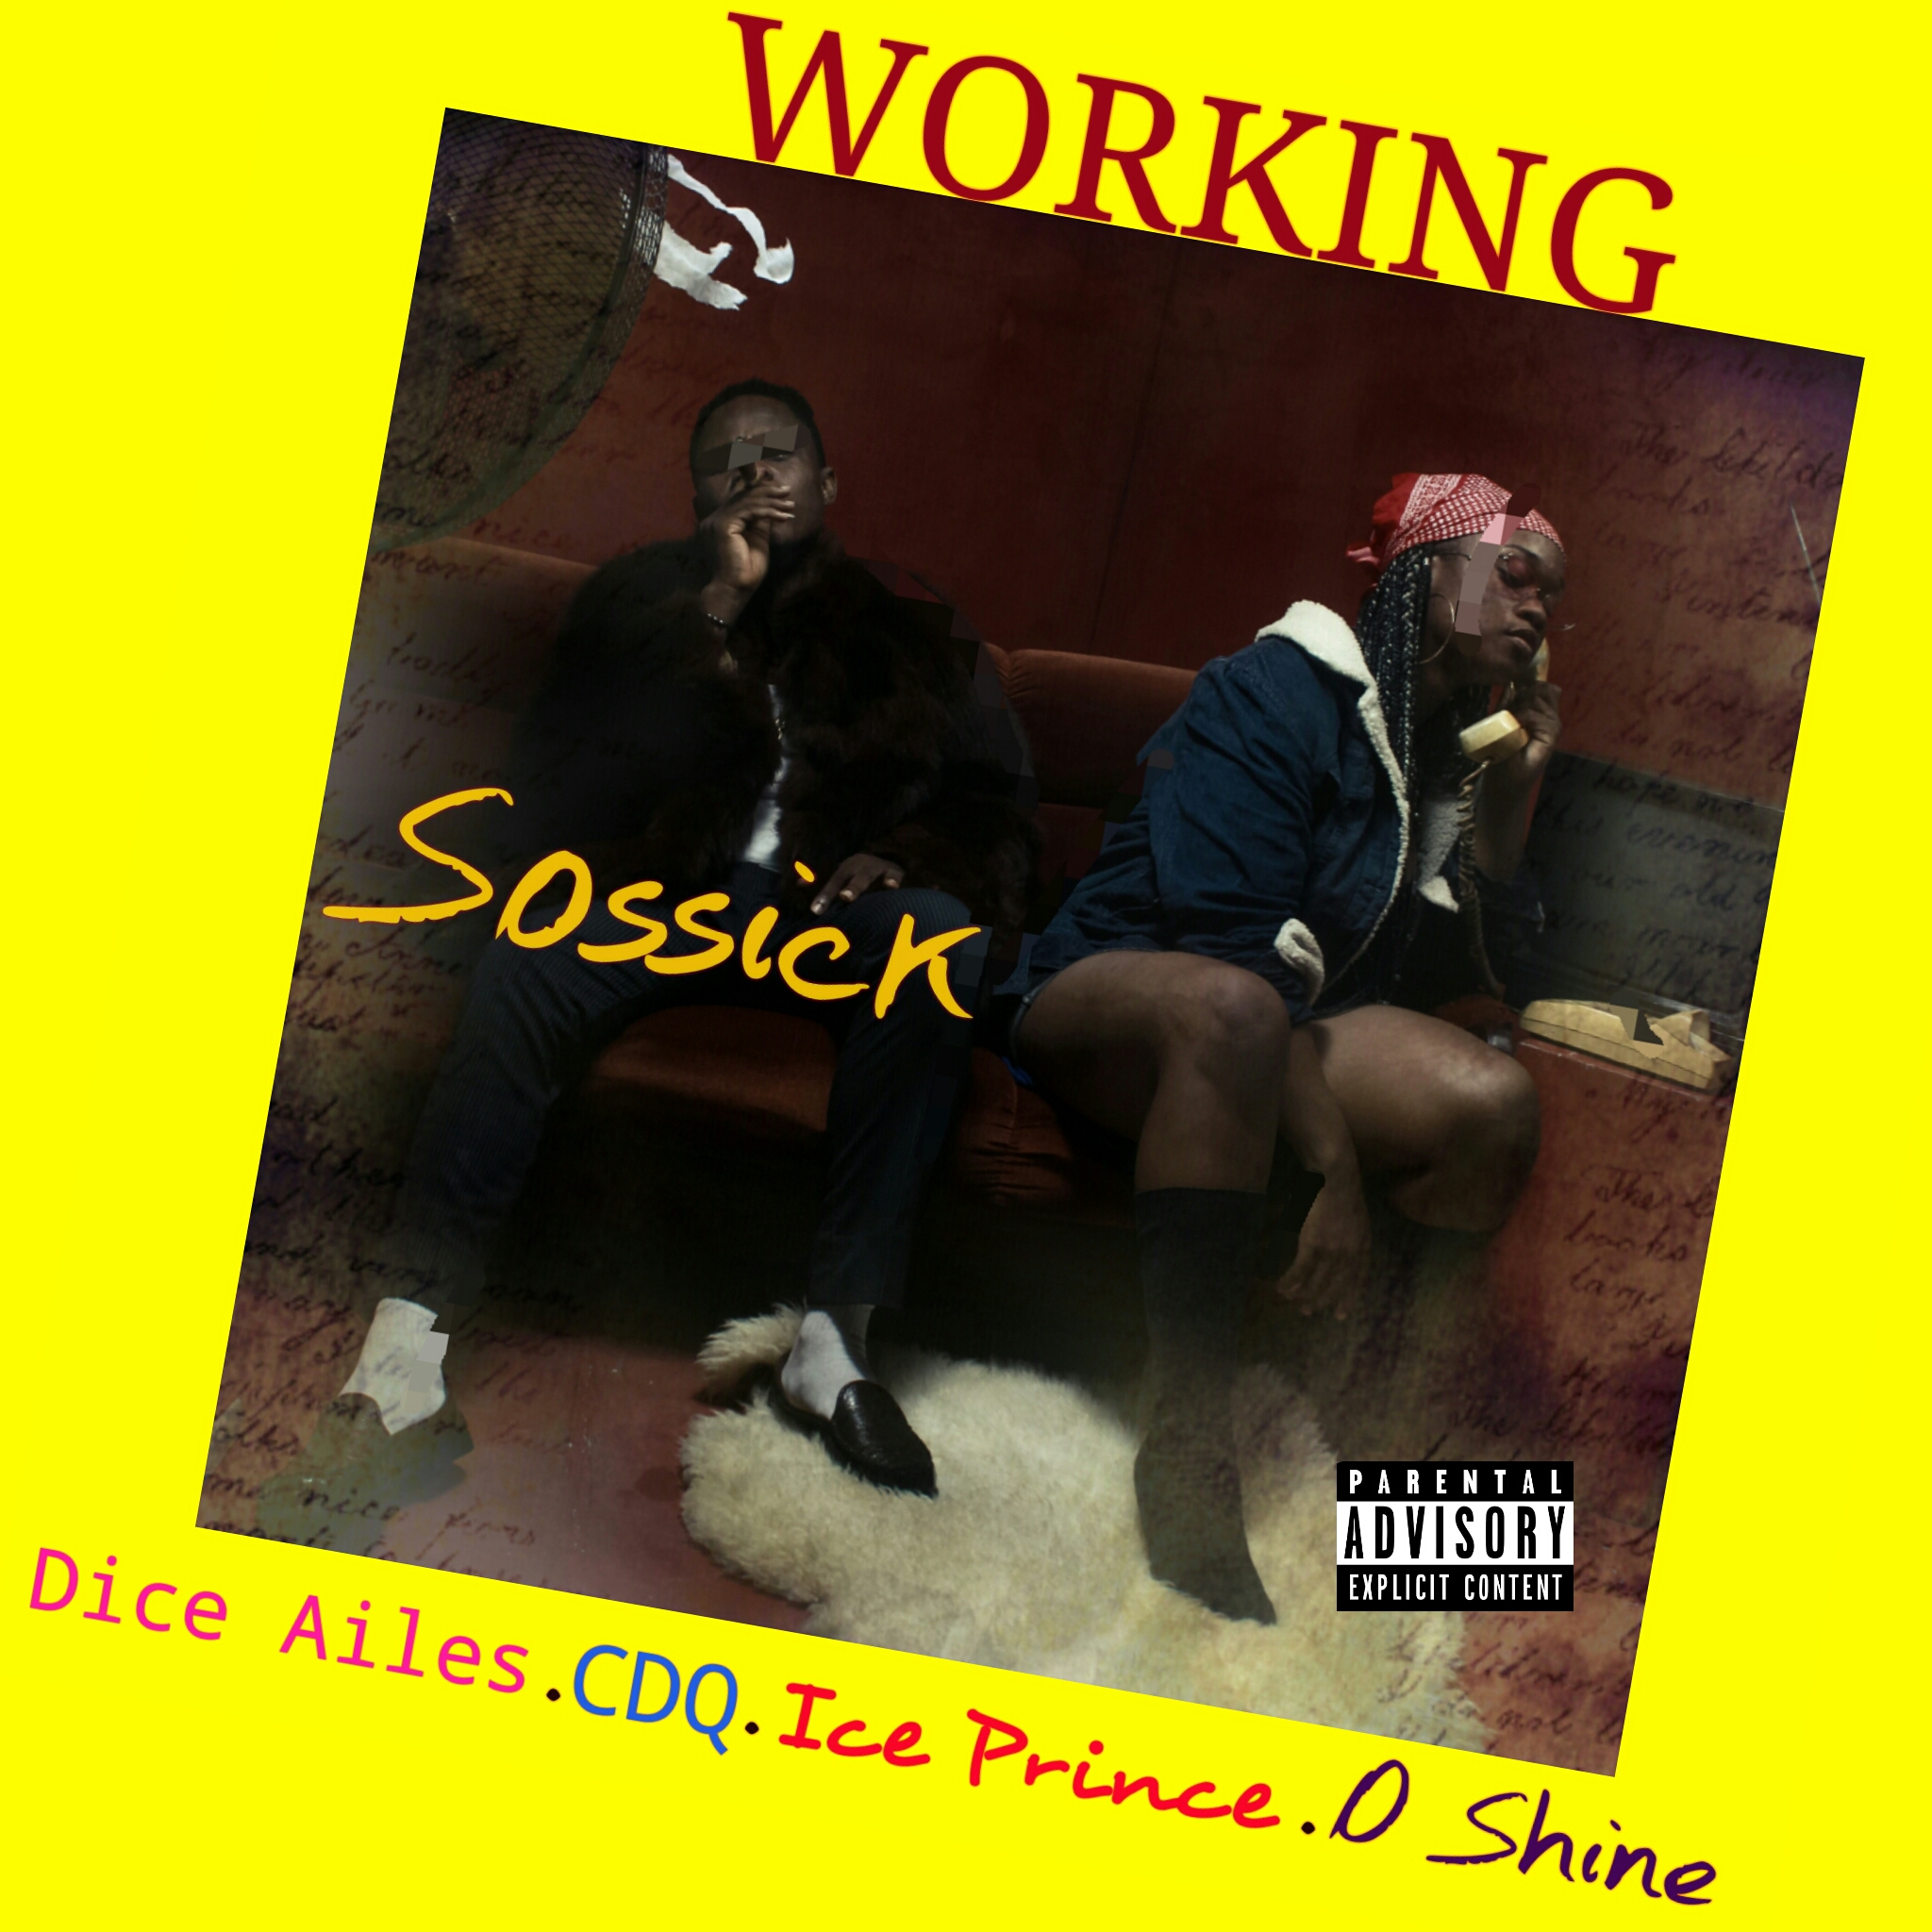 Sossick - Working ft. Dice Ailes X CDQ X Ice Prince X Oshine